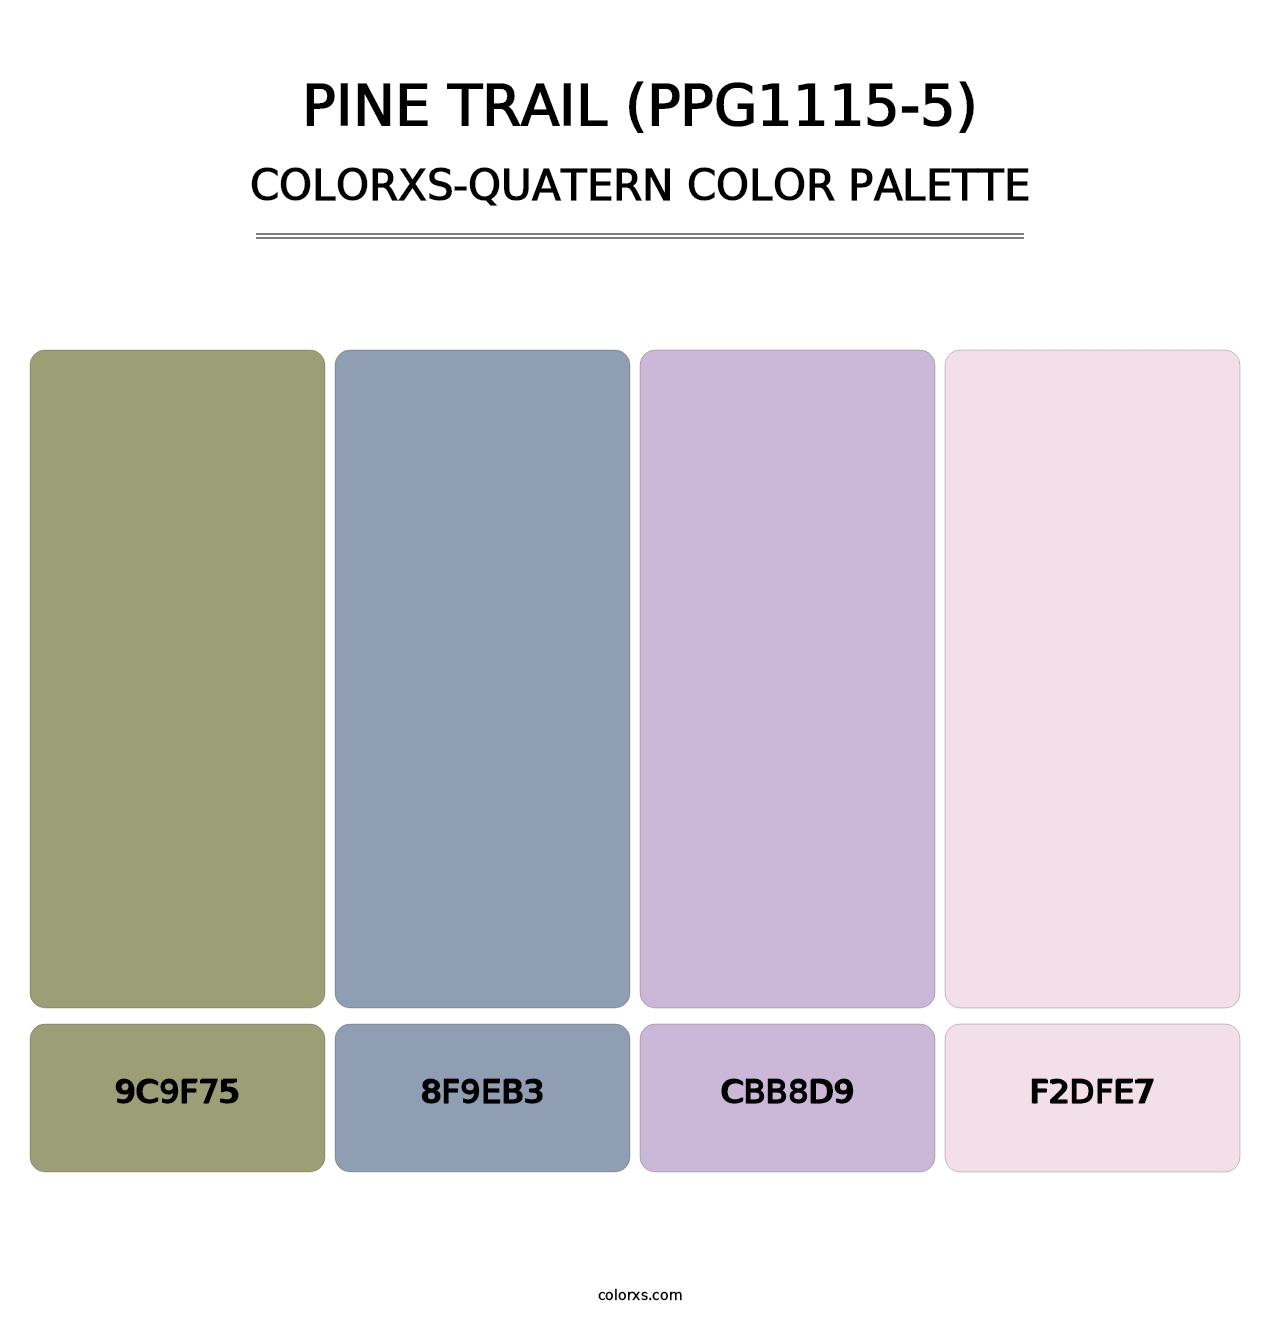 Pine Trail (PPG1115-5) - Colorxs Quatern Palette